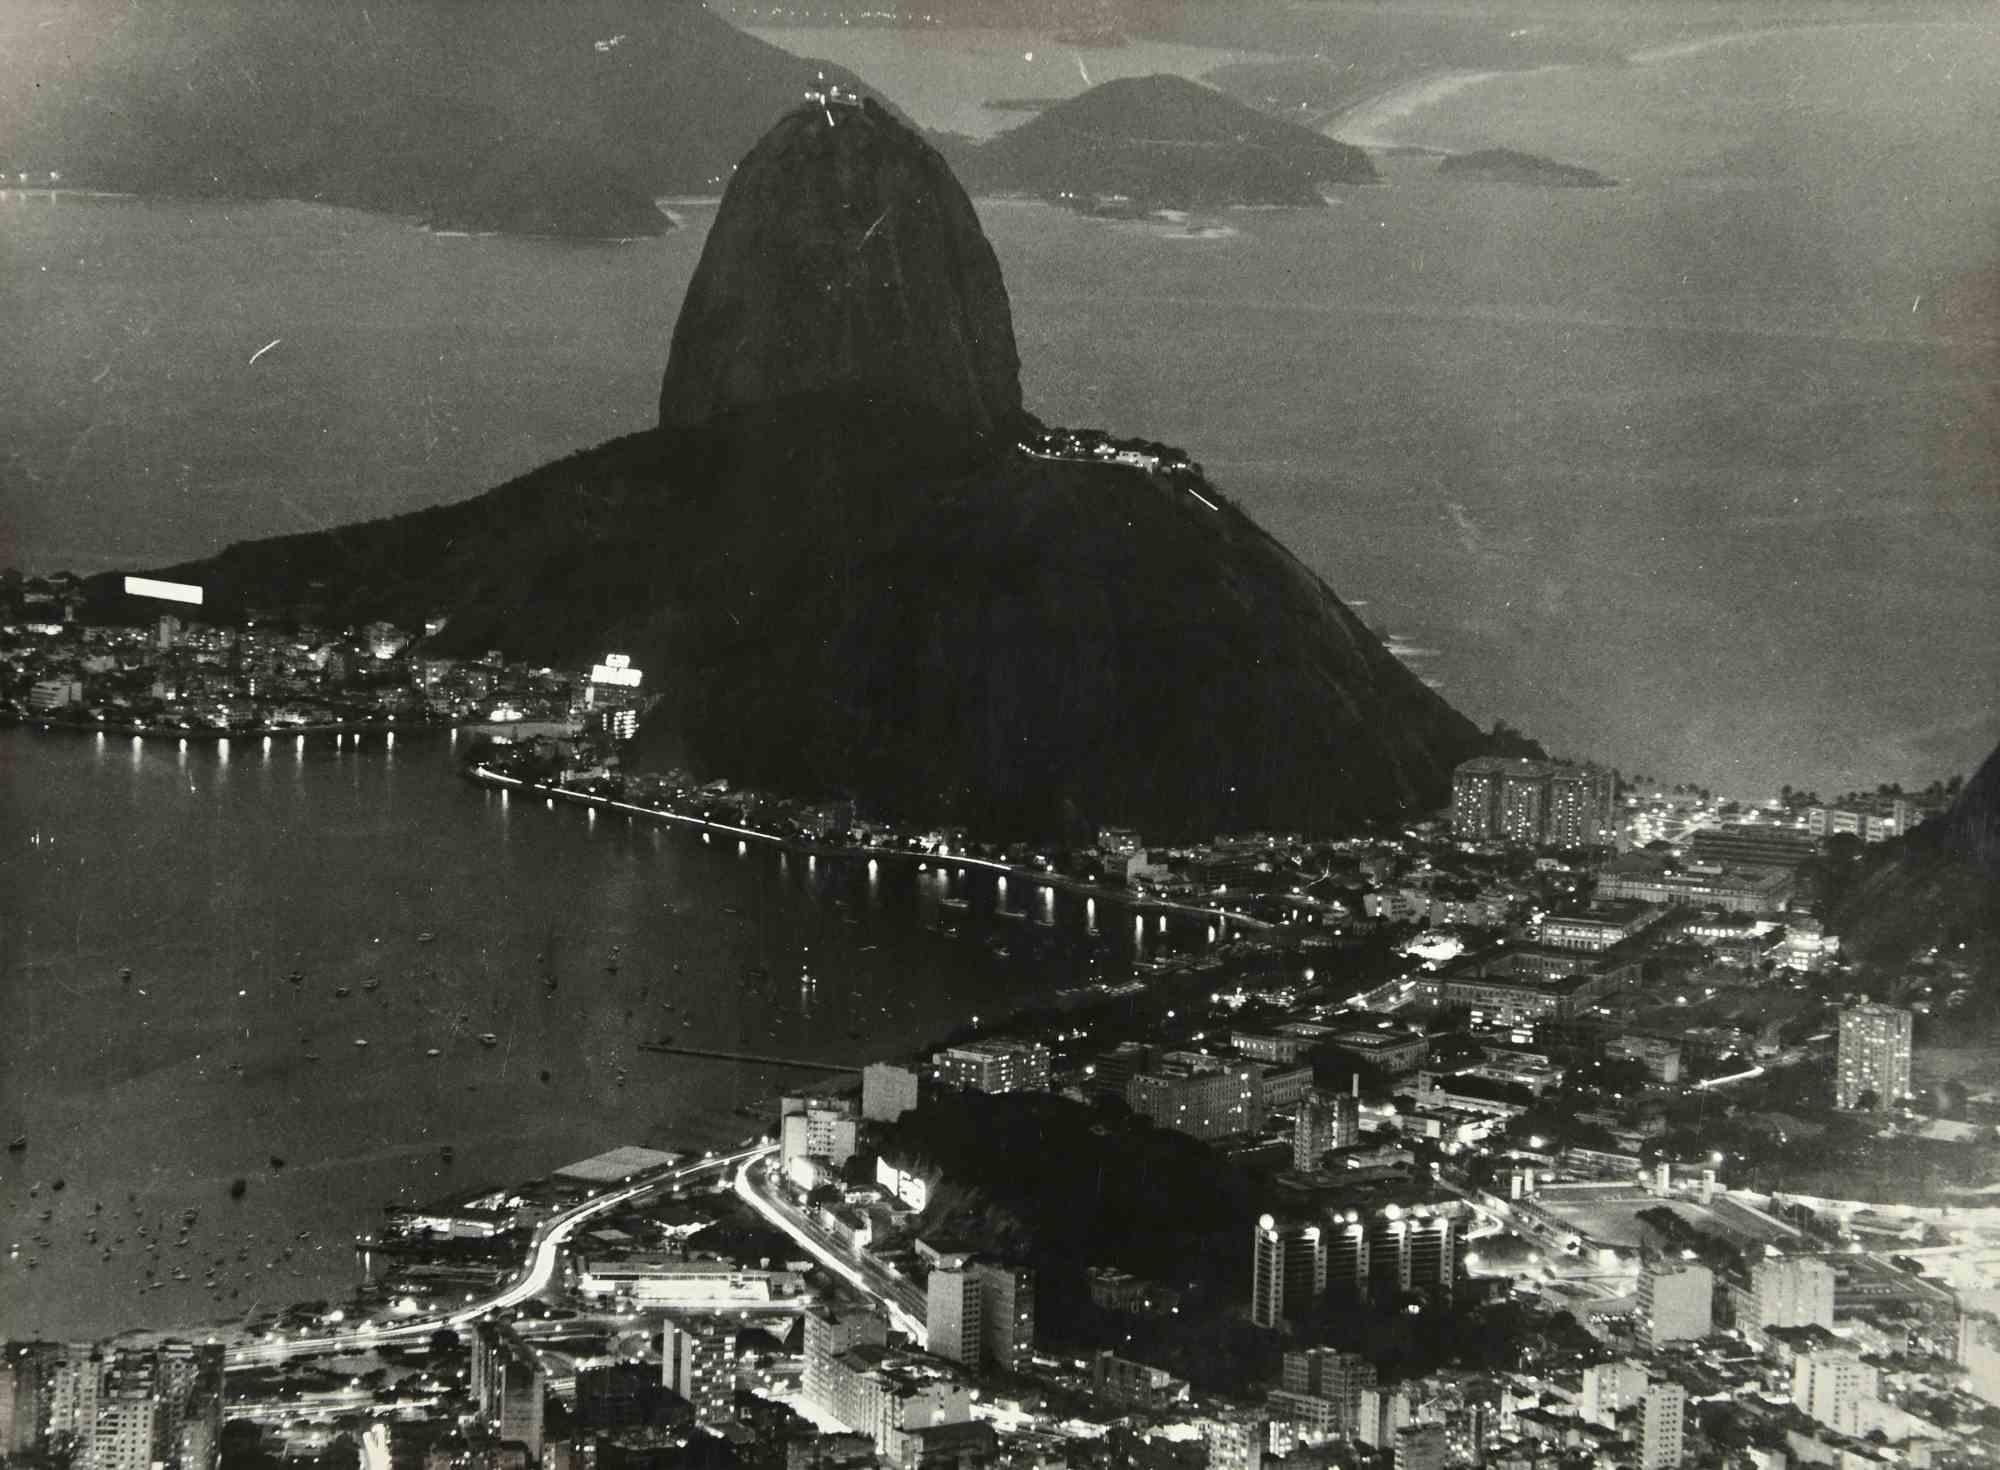 Unknown Landscape Photograph - Night view Rio De Janeiro - Vintage b/w Photo - 1970s